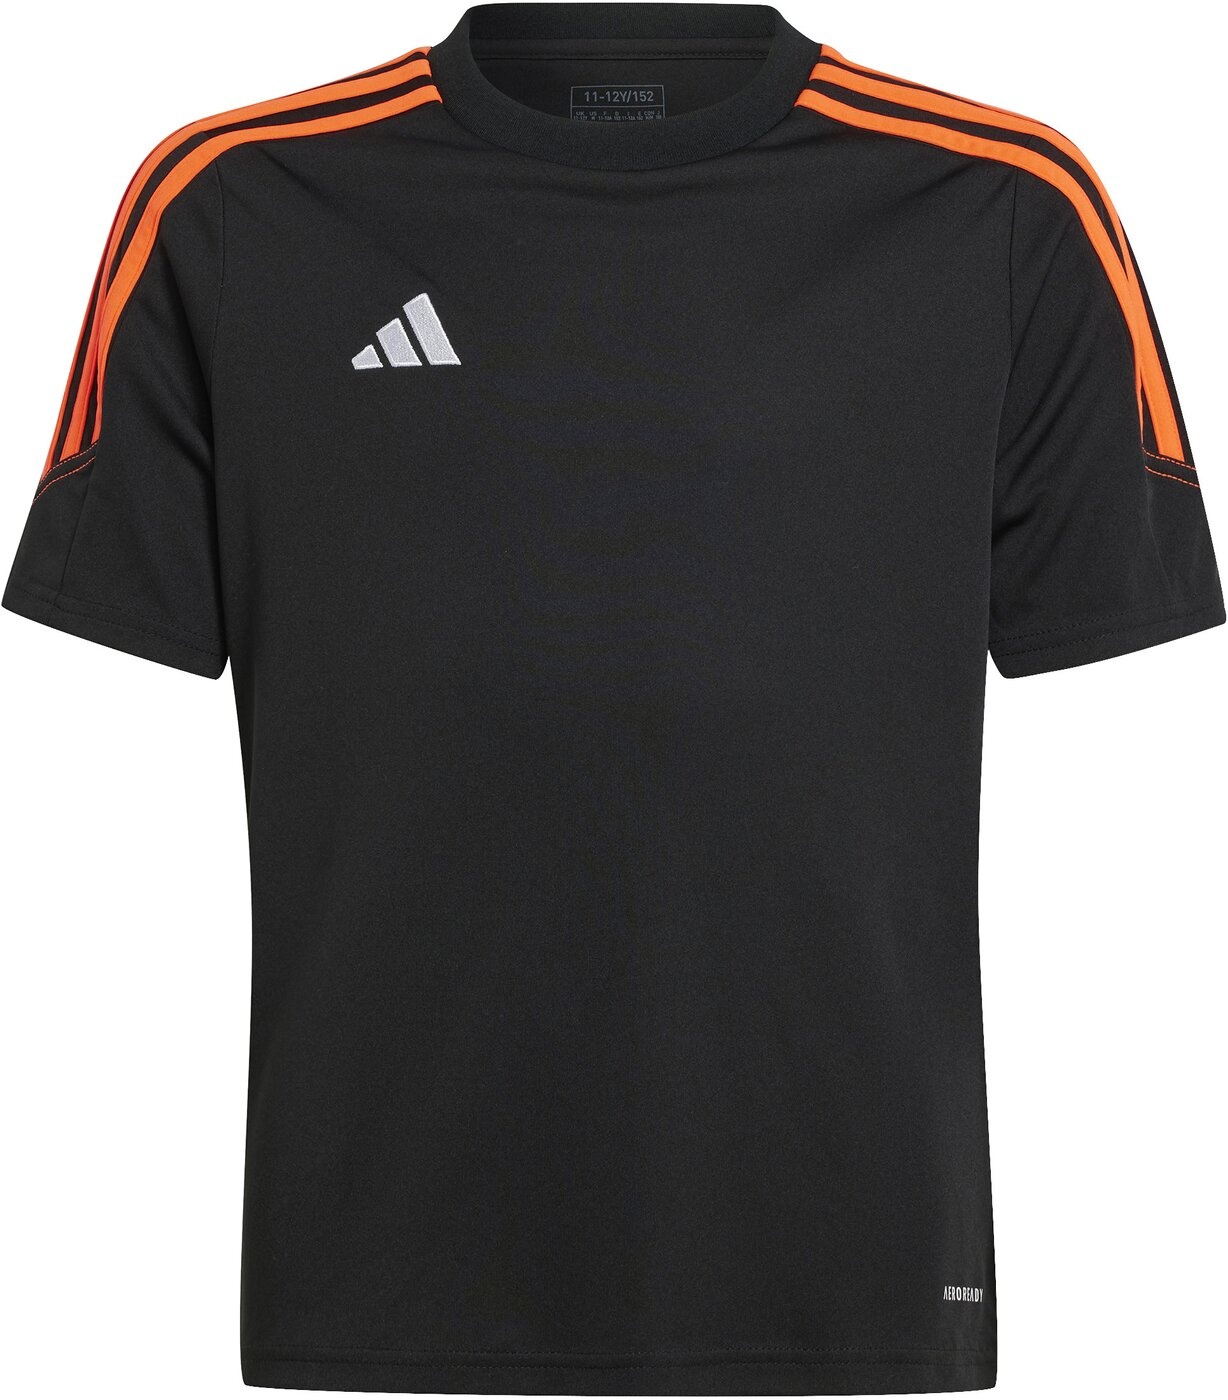 adidas TIRO23 CBTRJSYY Kinder Fußballtrikot schwarz/orange - 140